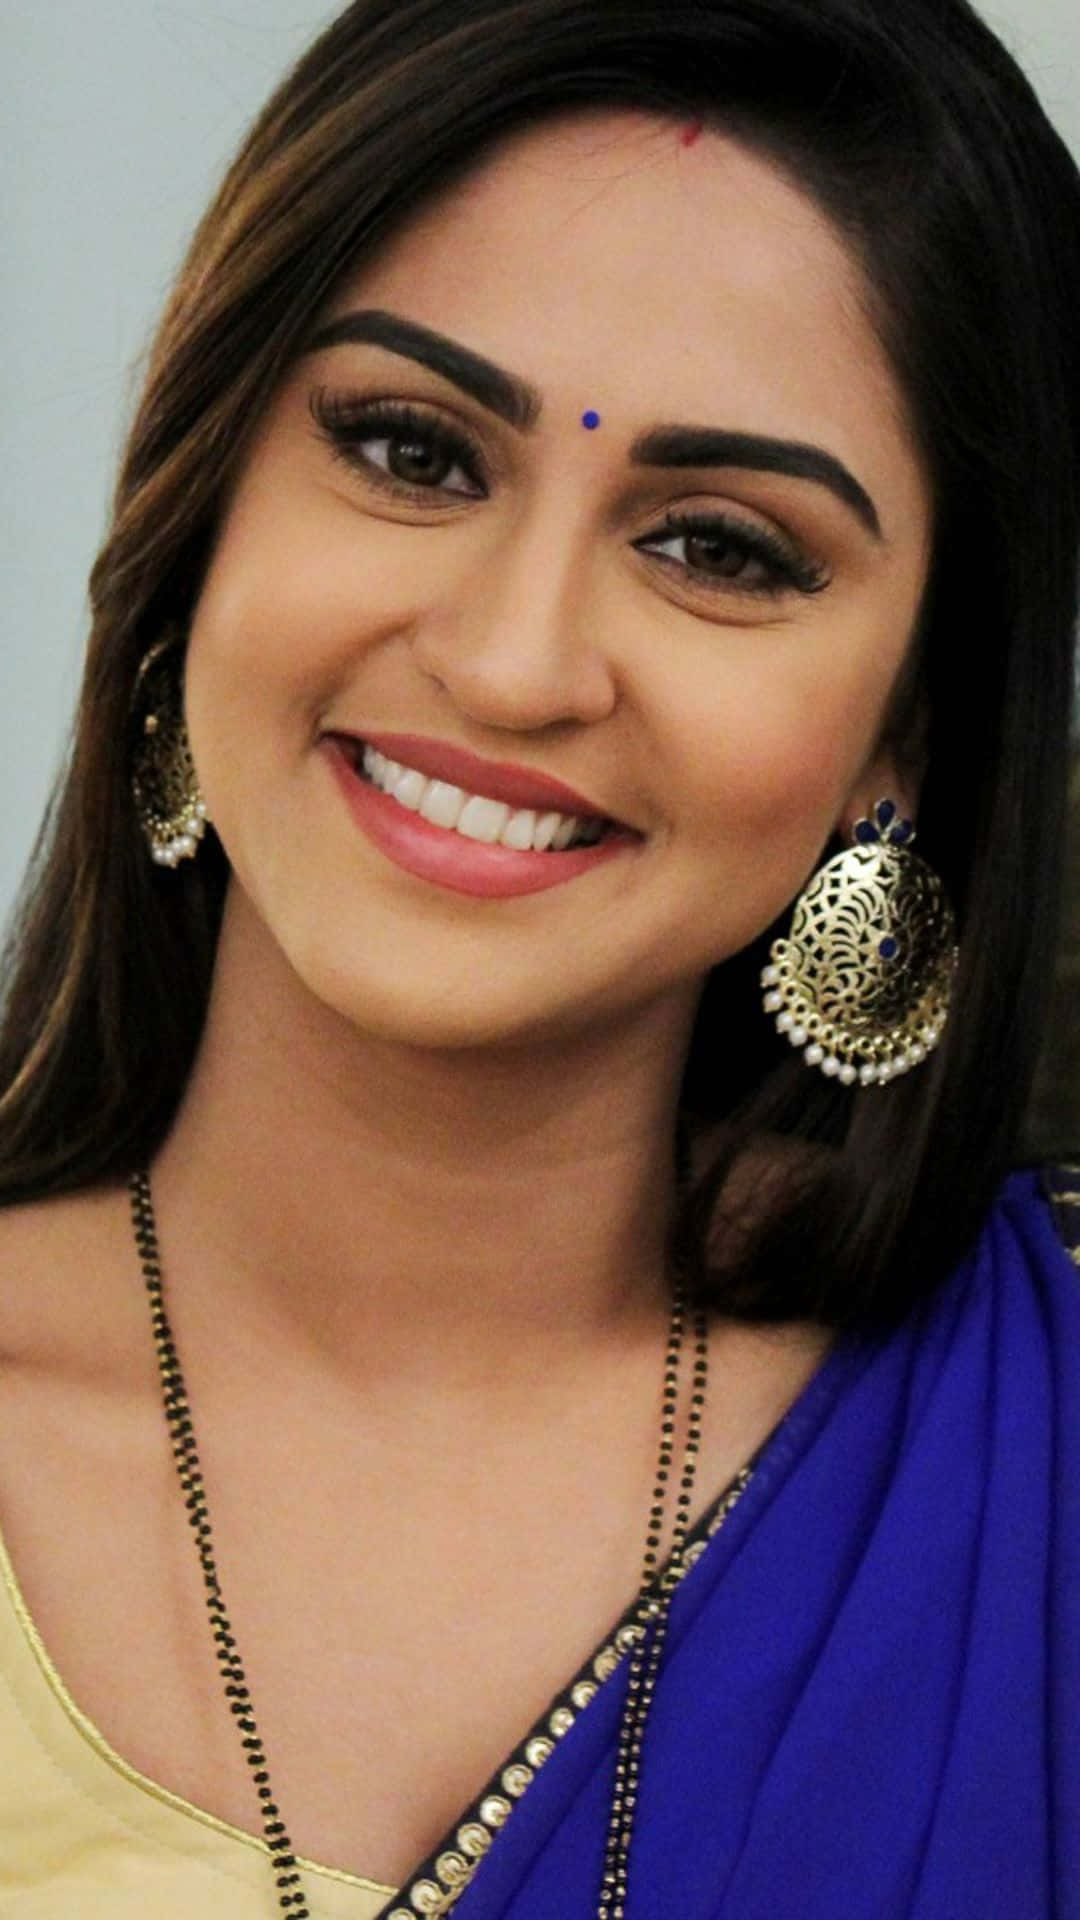 A Beautiful Woman In A Blue Sari Smiling Wallpaper